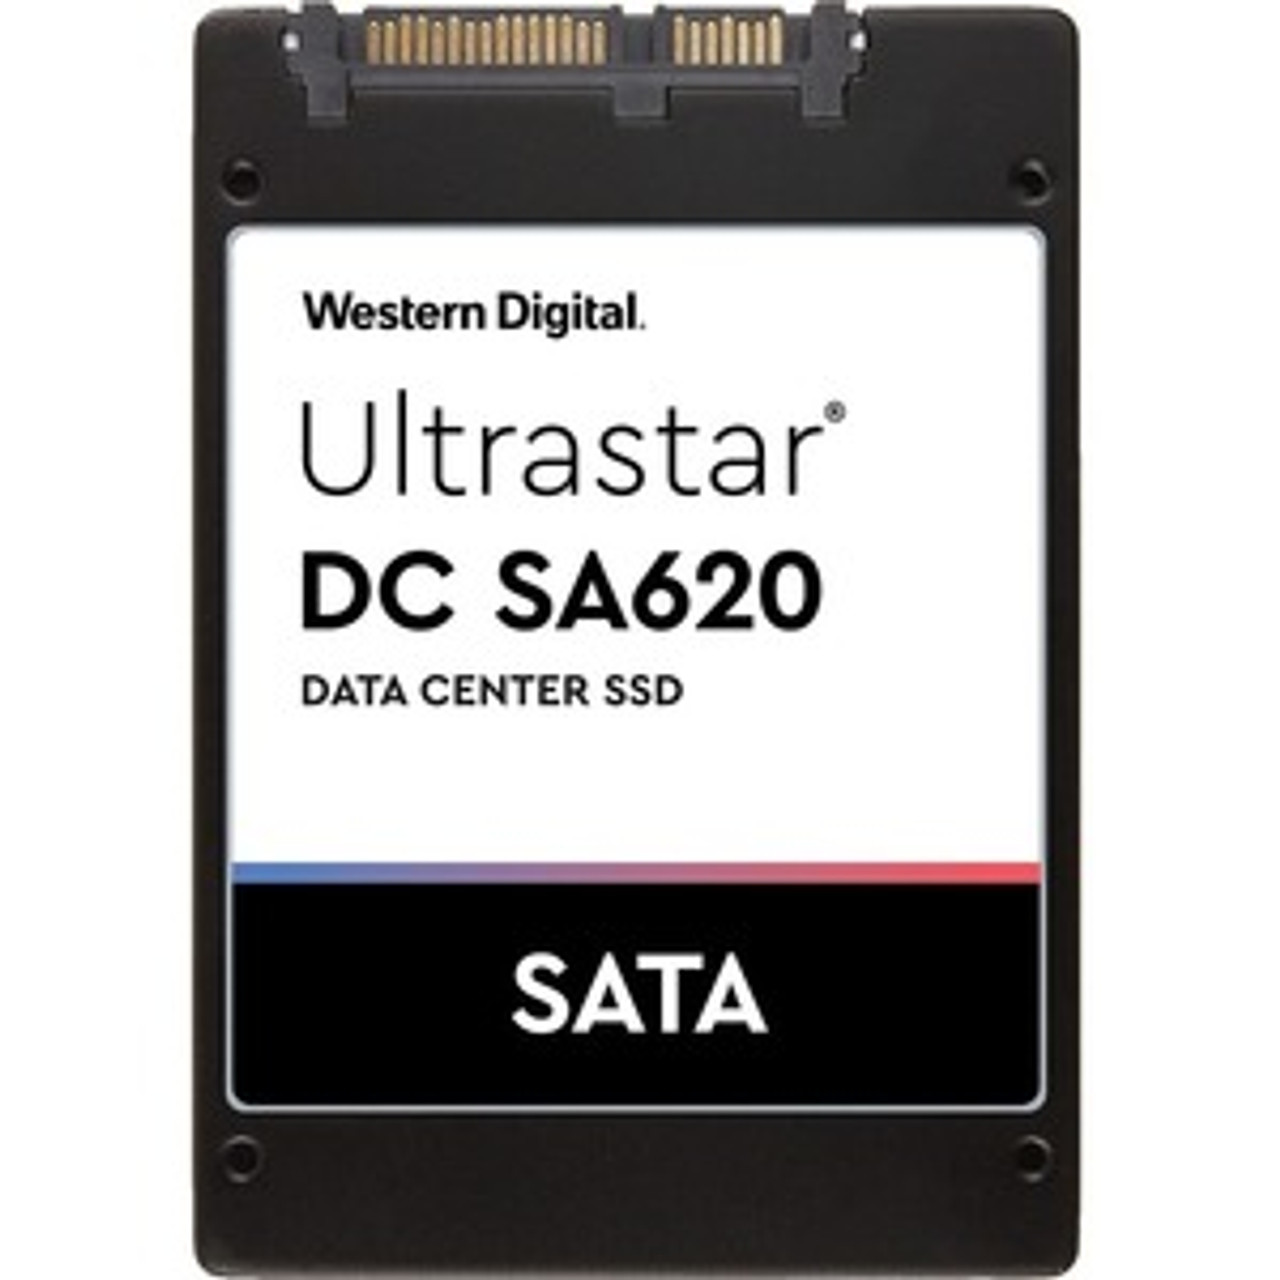 0TS1816 Western Digital Ultrastar DC SA620 480GB MLC SATA 6Gbps Read Intensive (ISE) 2.5-inch Internal Solid State Drive (SSD)